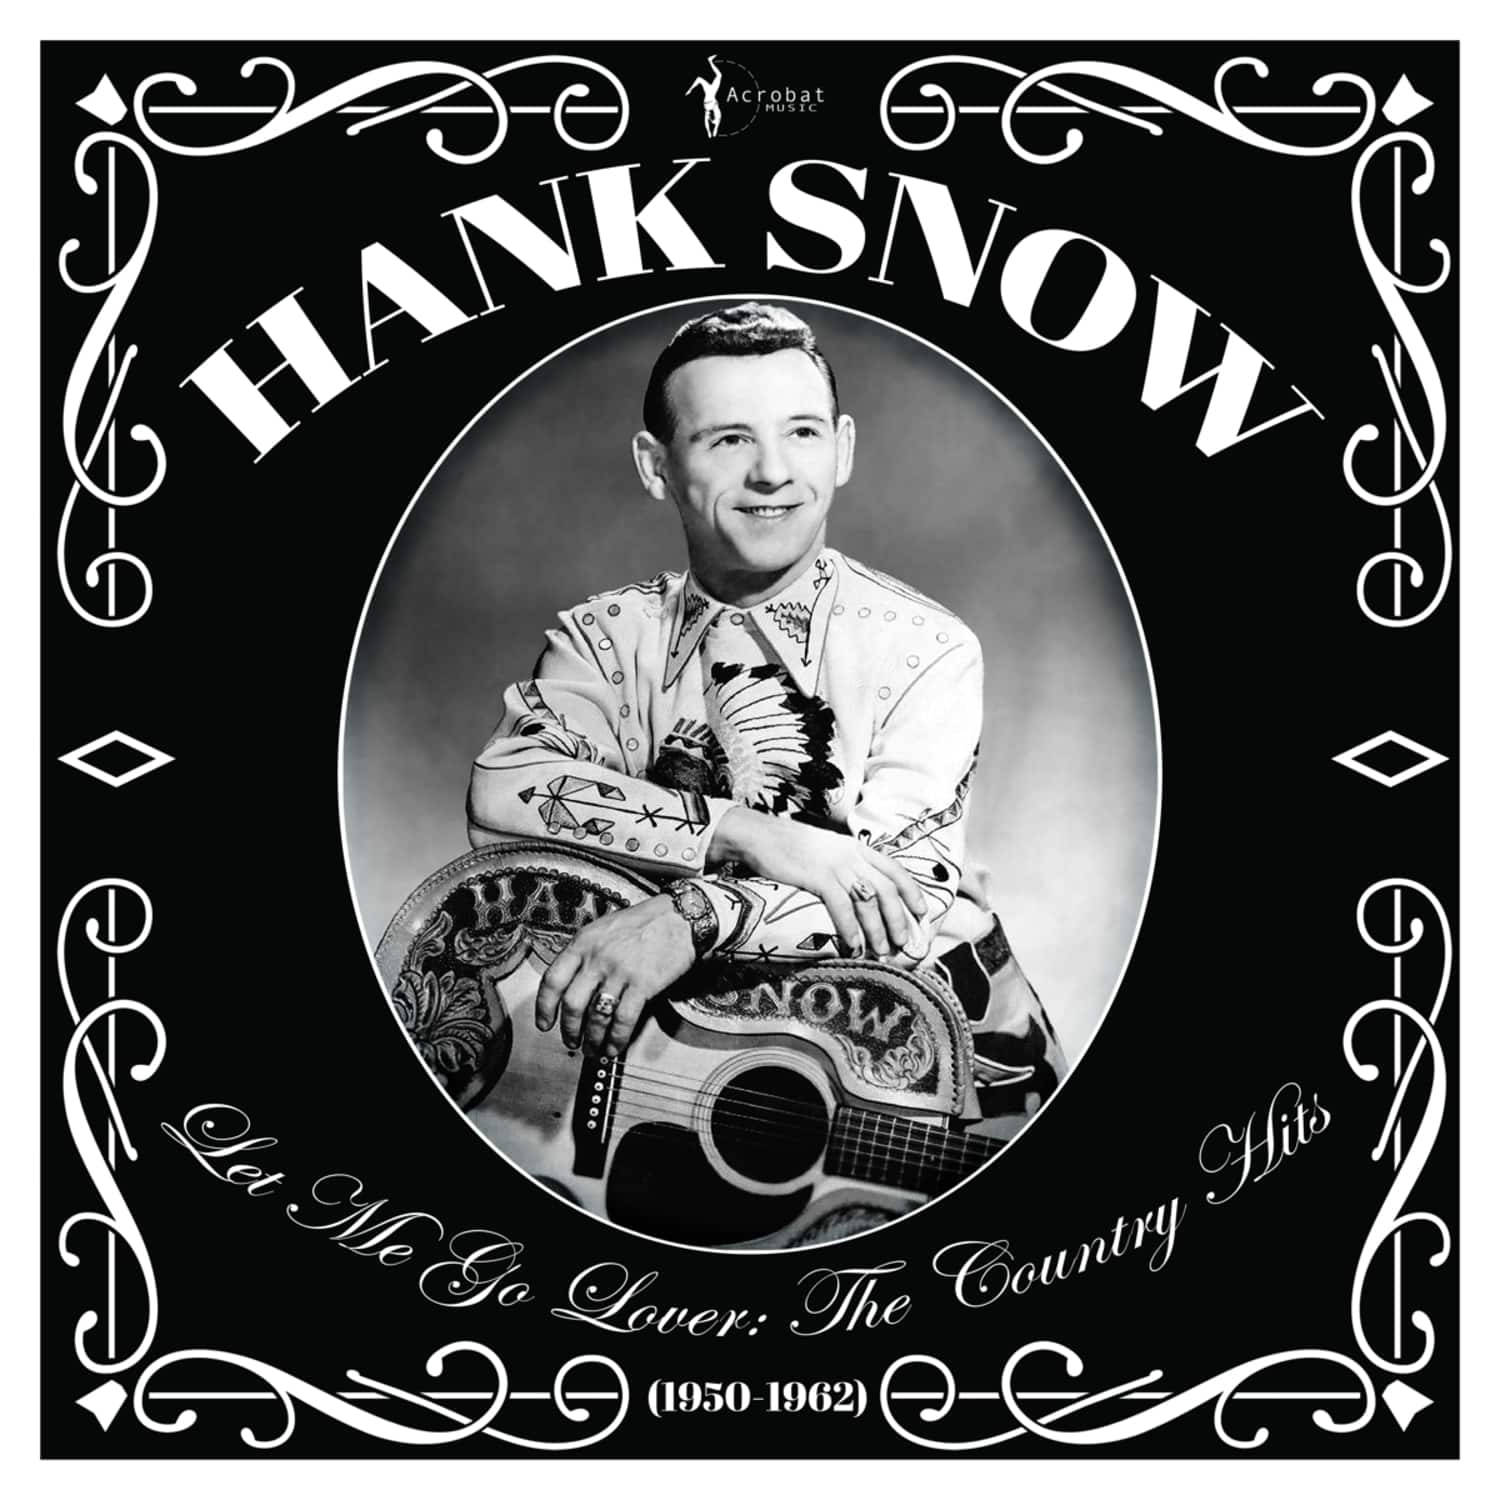 The Legendary Hank Snow Commemorative Hits Album Cover Wallpaper